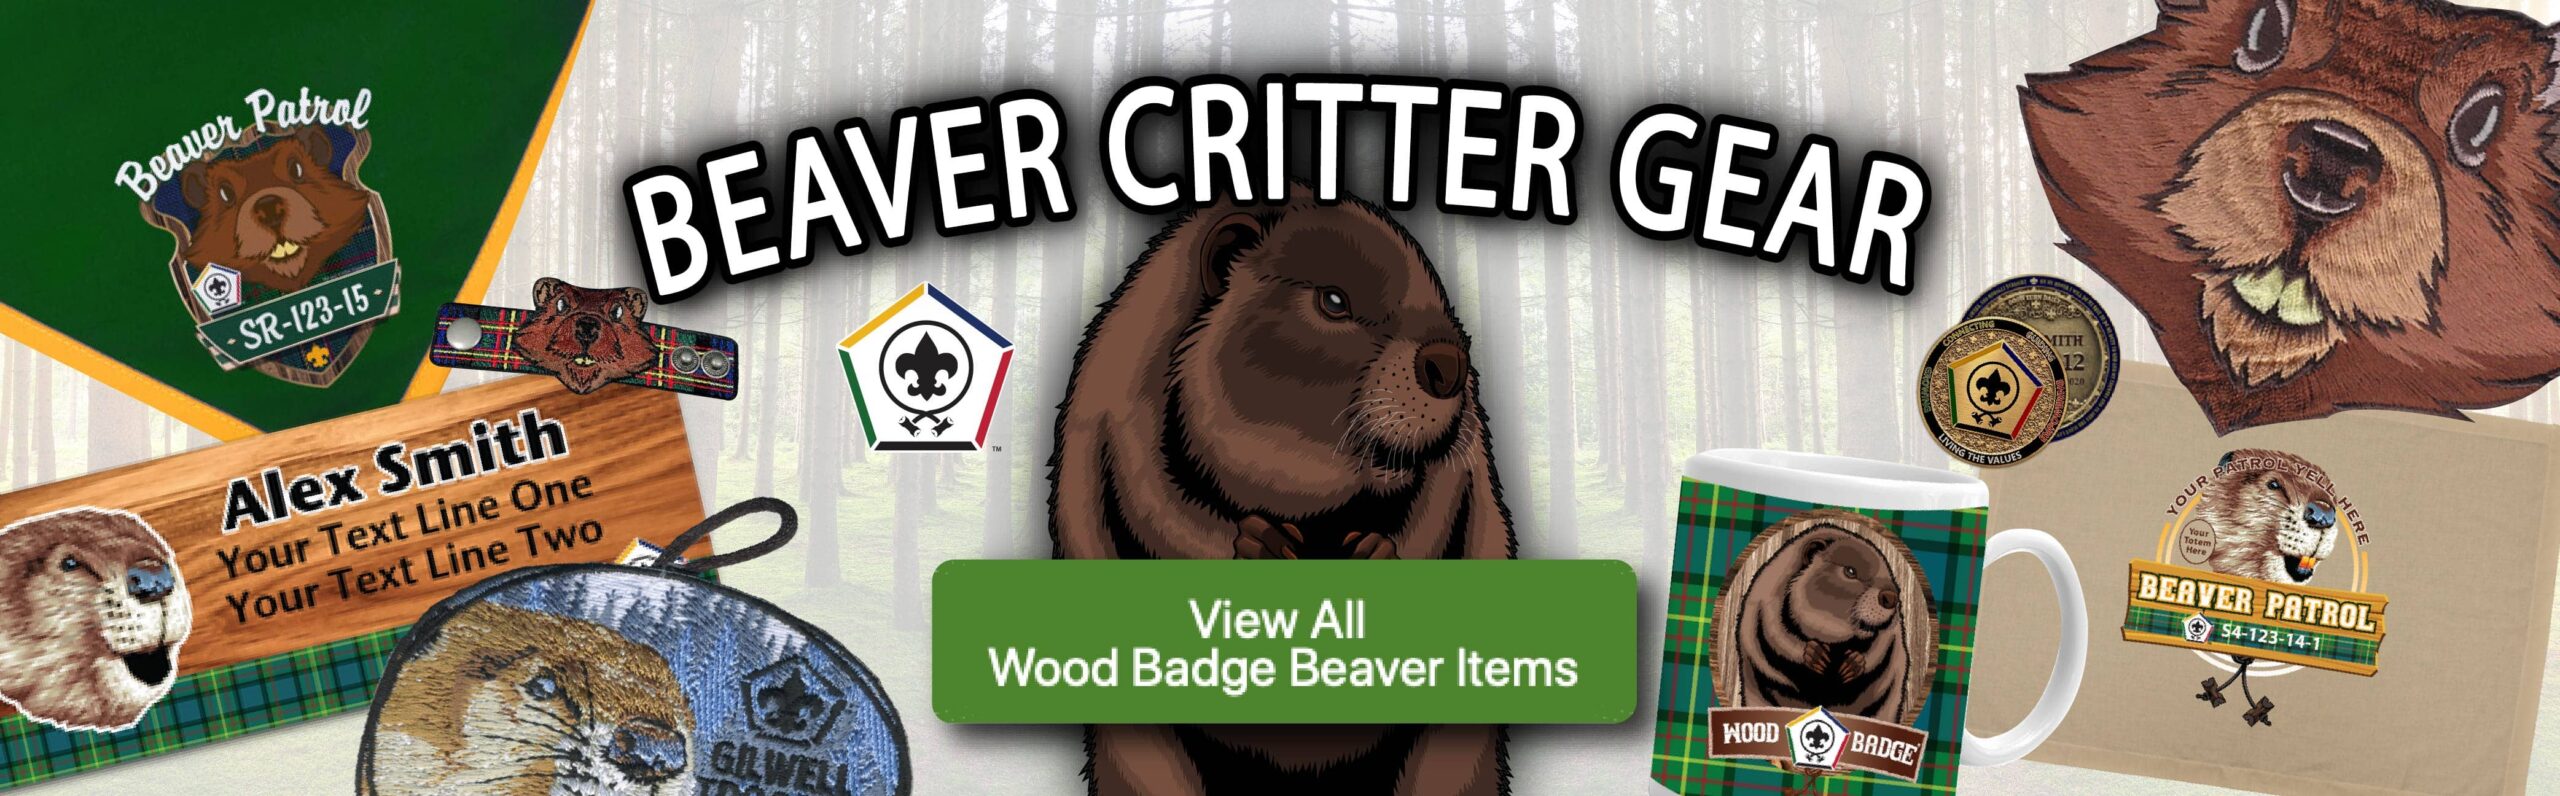 wood badge Beaver critter gear header image